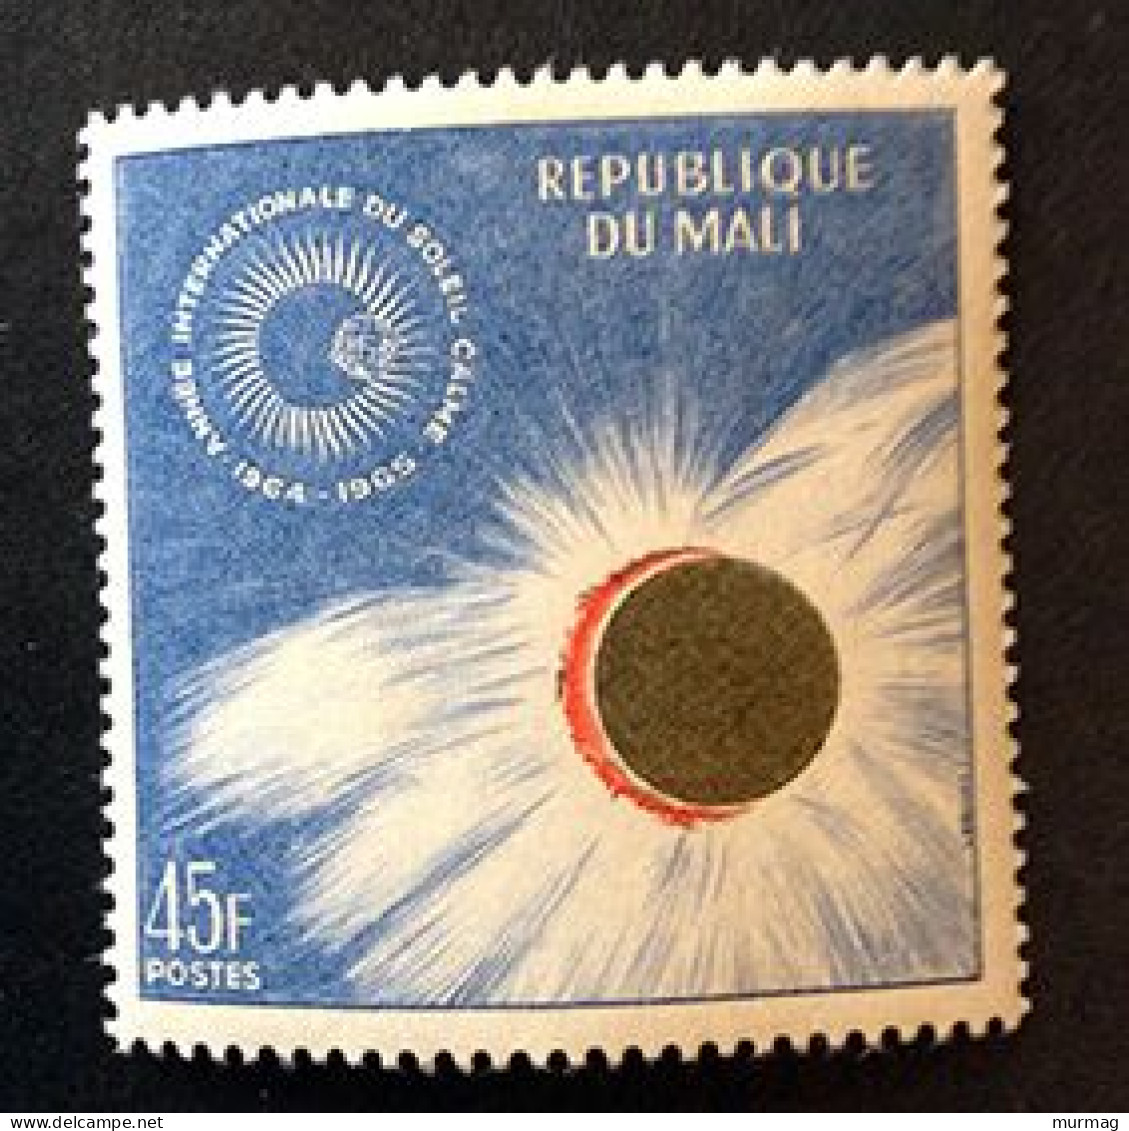 MALI - Année Internationale Du Soleil Calme -Y&T N° 67 - 1964 - MNH - Mali (1959-...)